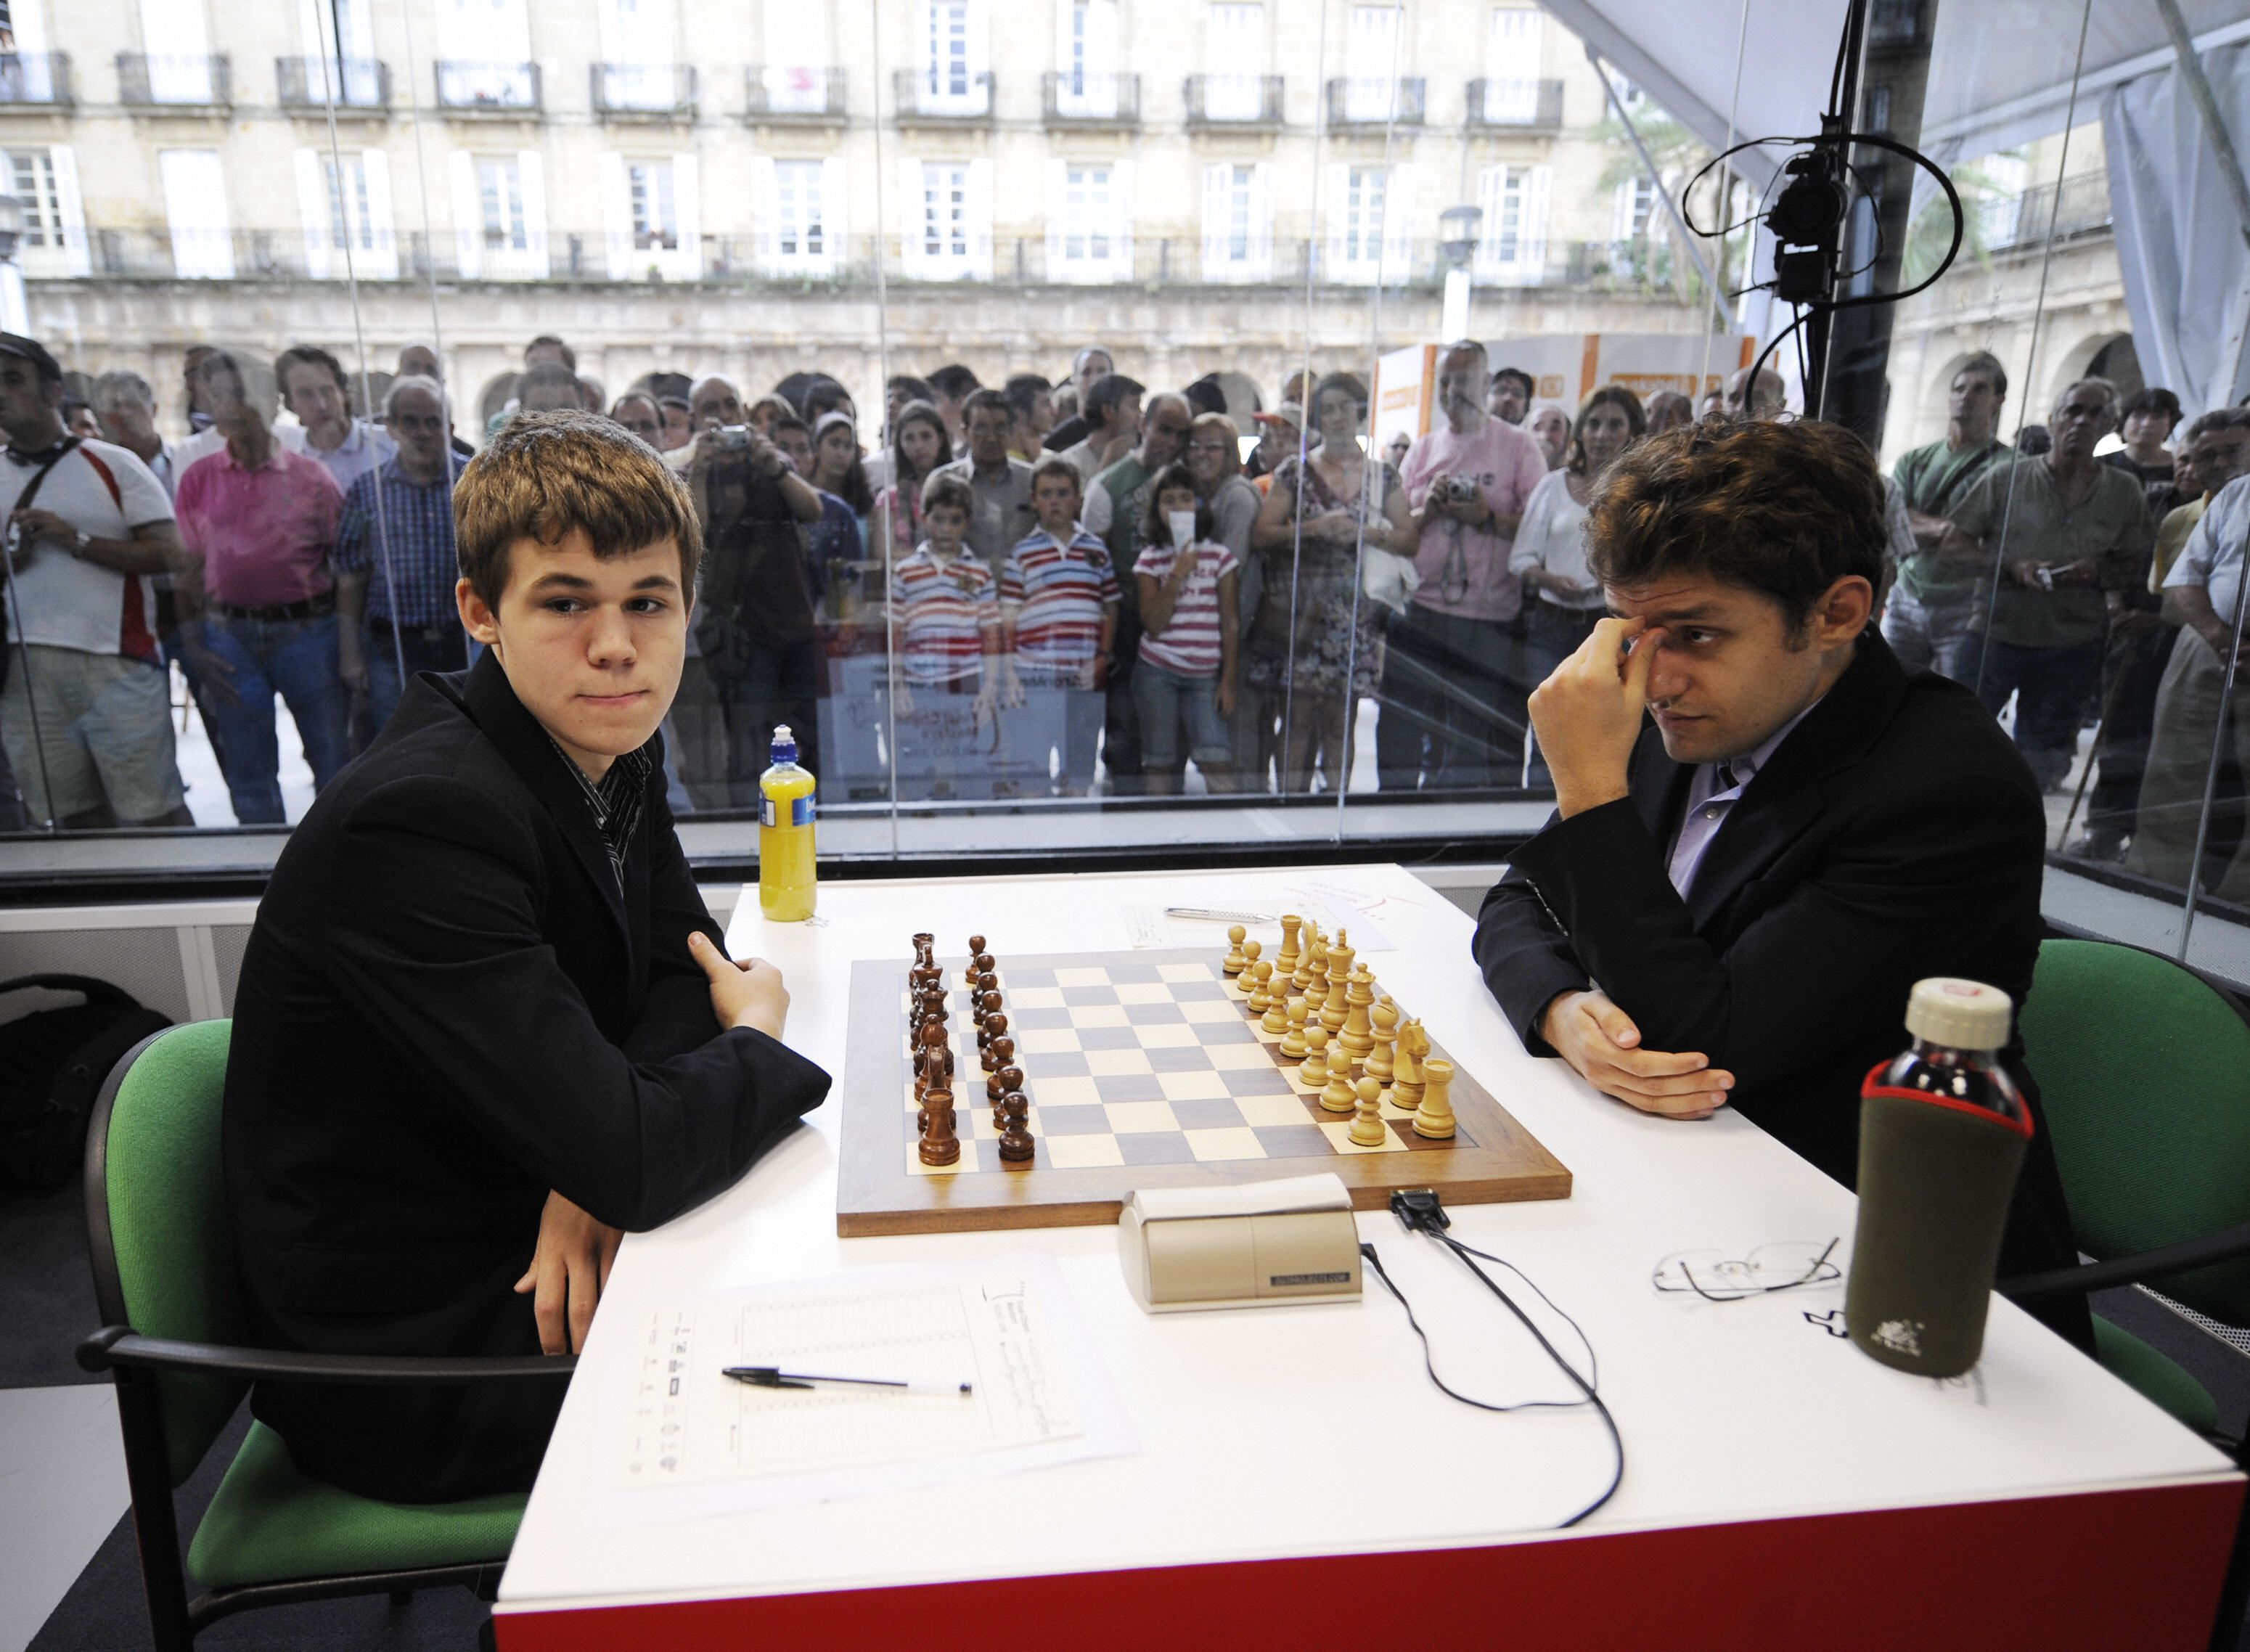 The IQ Tracking Of Chess Grandmasters: Magnus Carlsen - Bobby